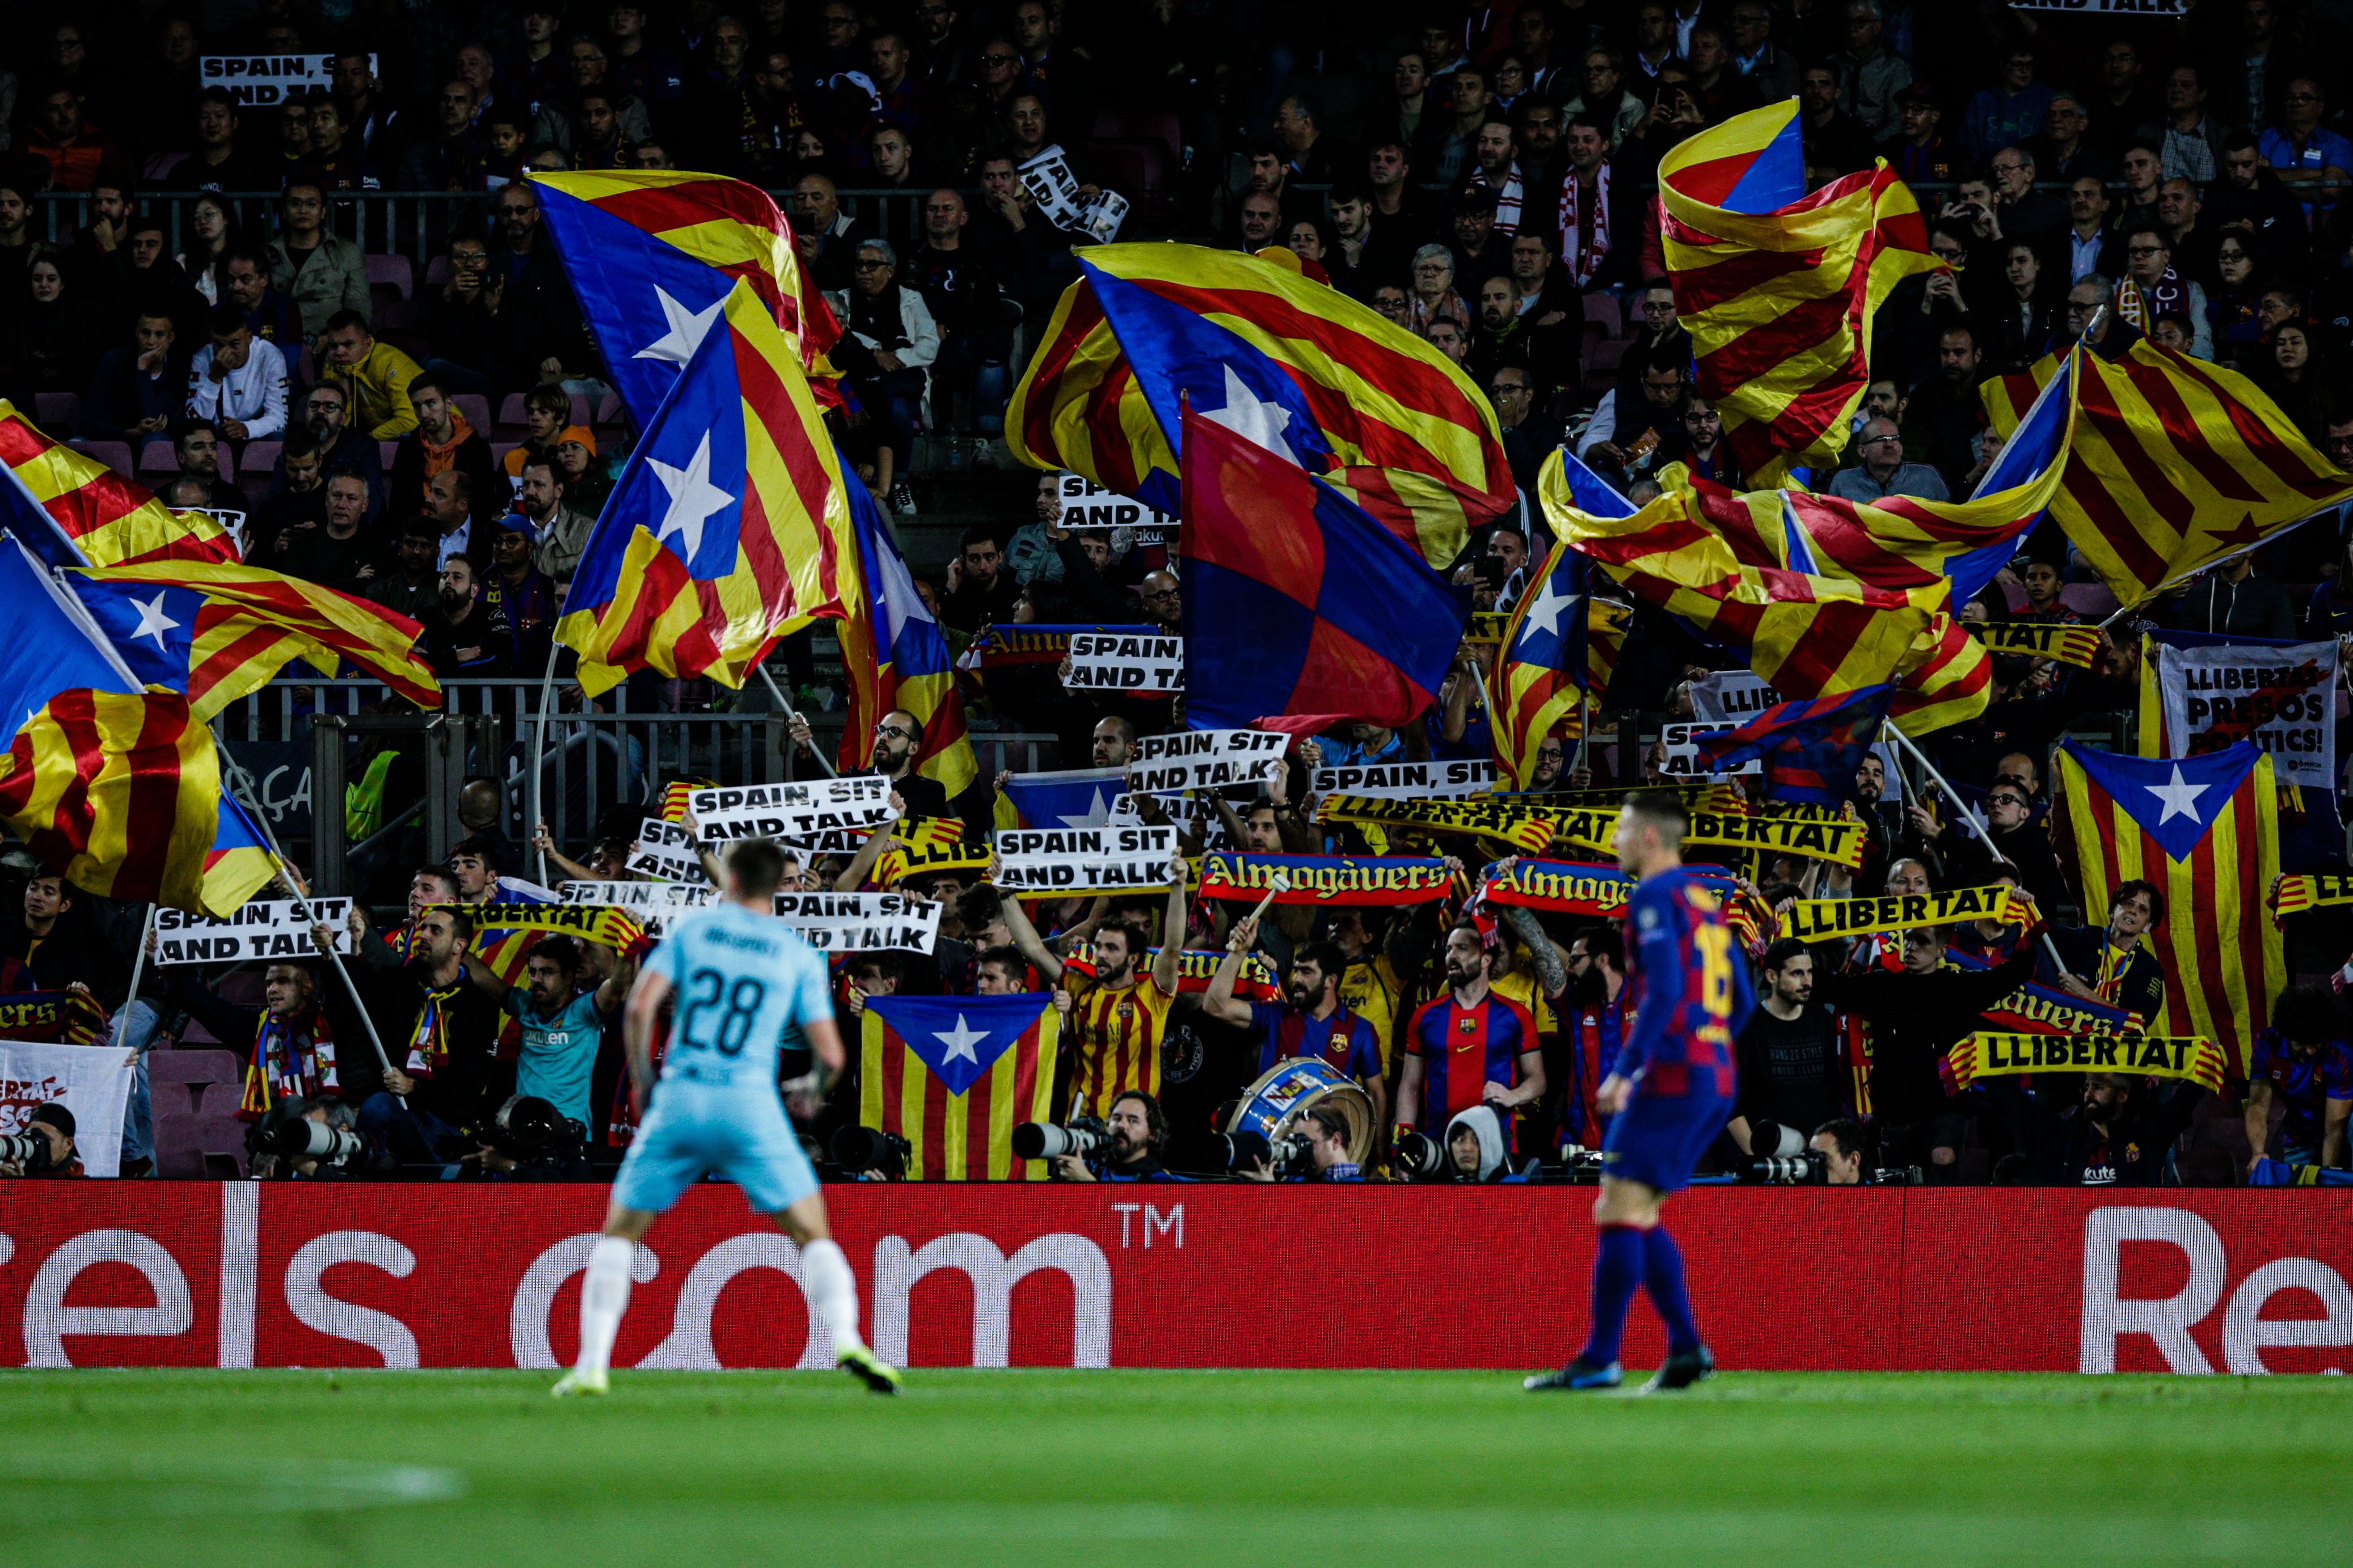 Un Barça-Madrid inédito y a la sombra del Tsunami Democràtic